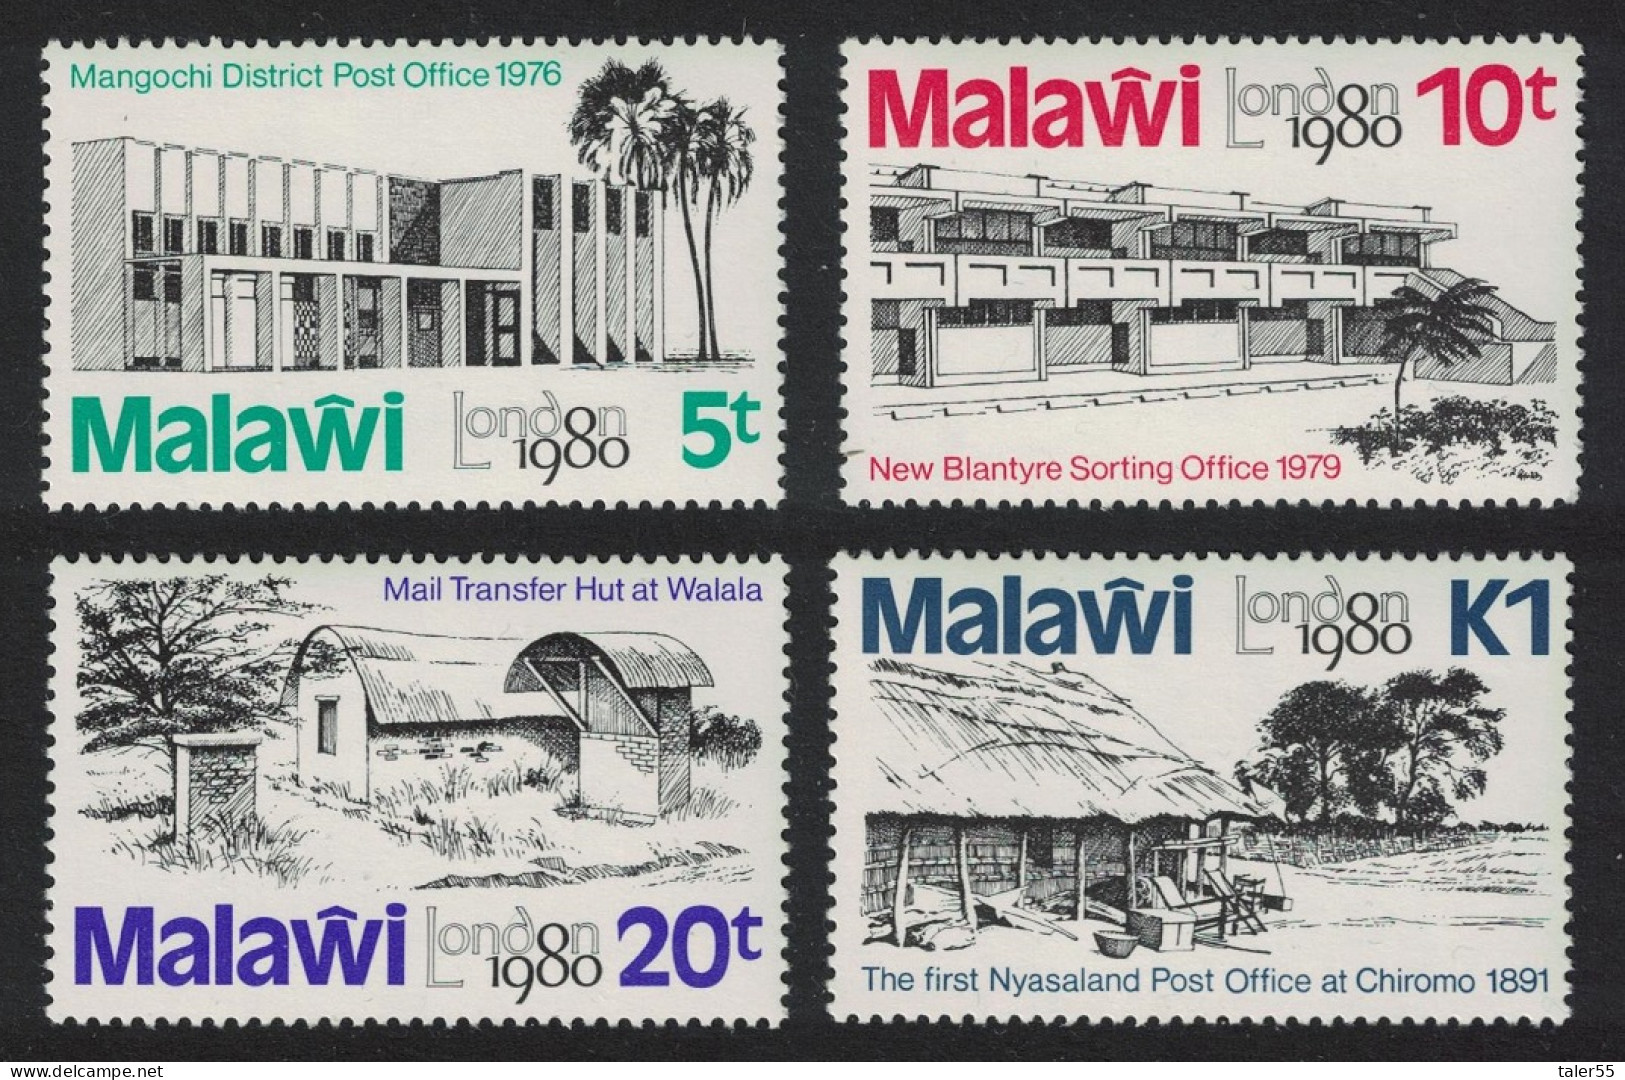 Malawi London 1980 International Stamp Exhibition 4v 1980 MNH SG#620-623 - Malawi (1964-...)